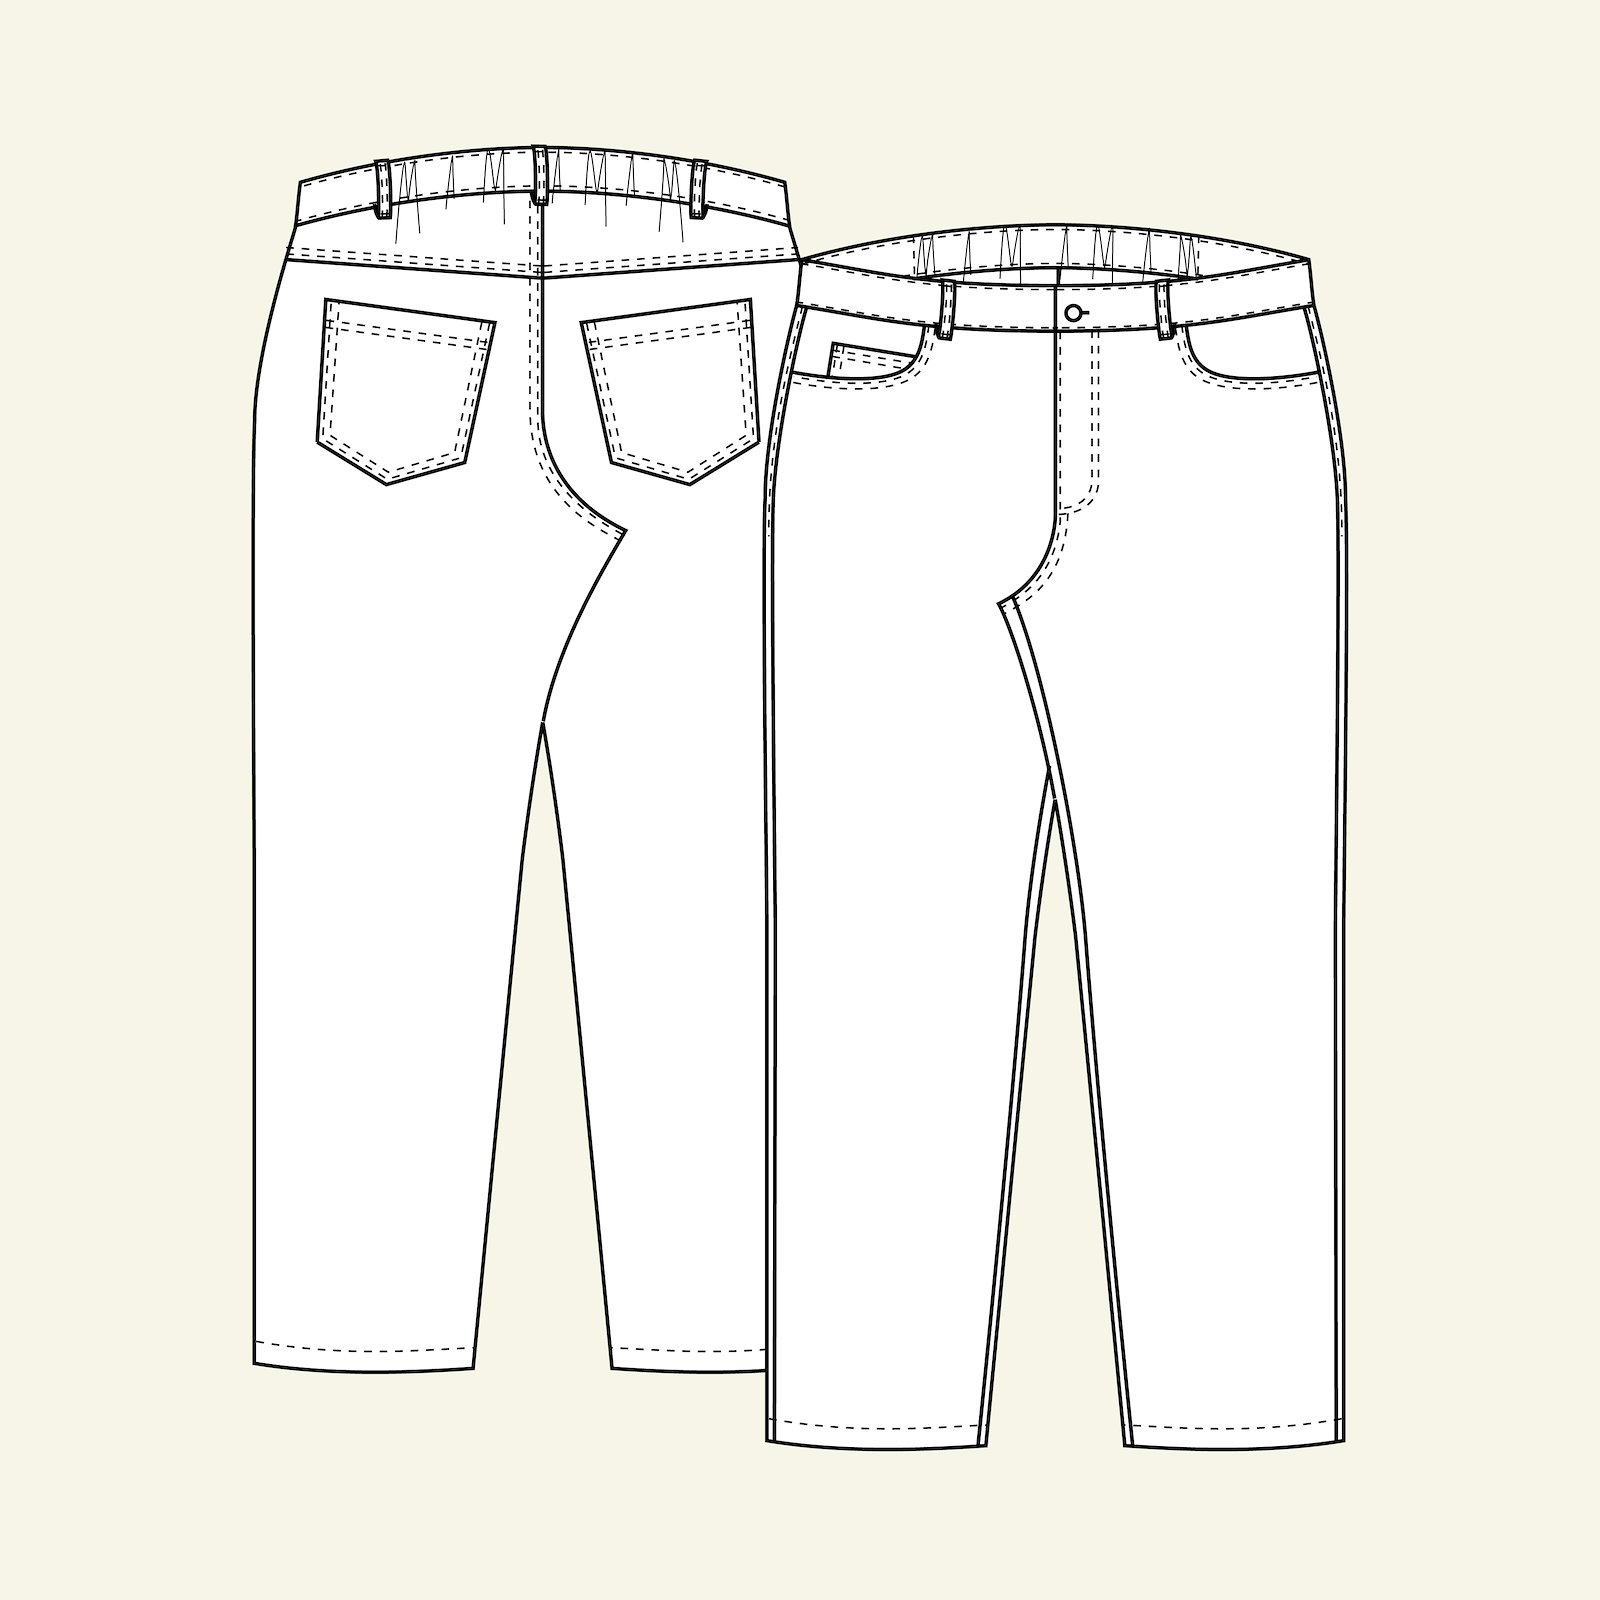 Klassisch Jeans mit Gummiband hinter, 48 p70007000_p70007001_p70007002_p70007003_p70007004_pack_b